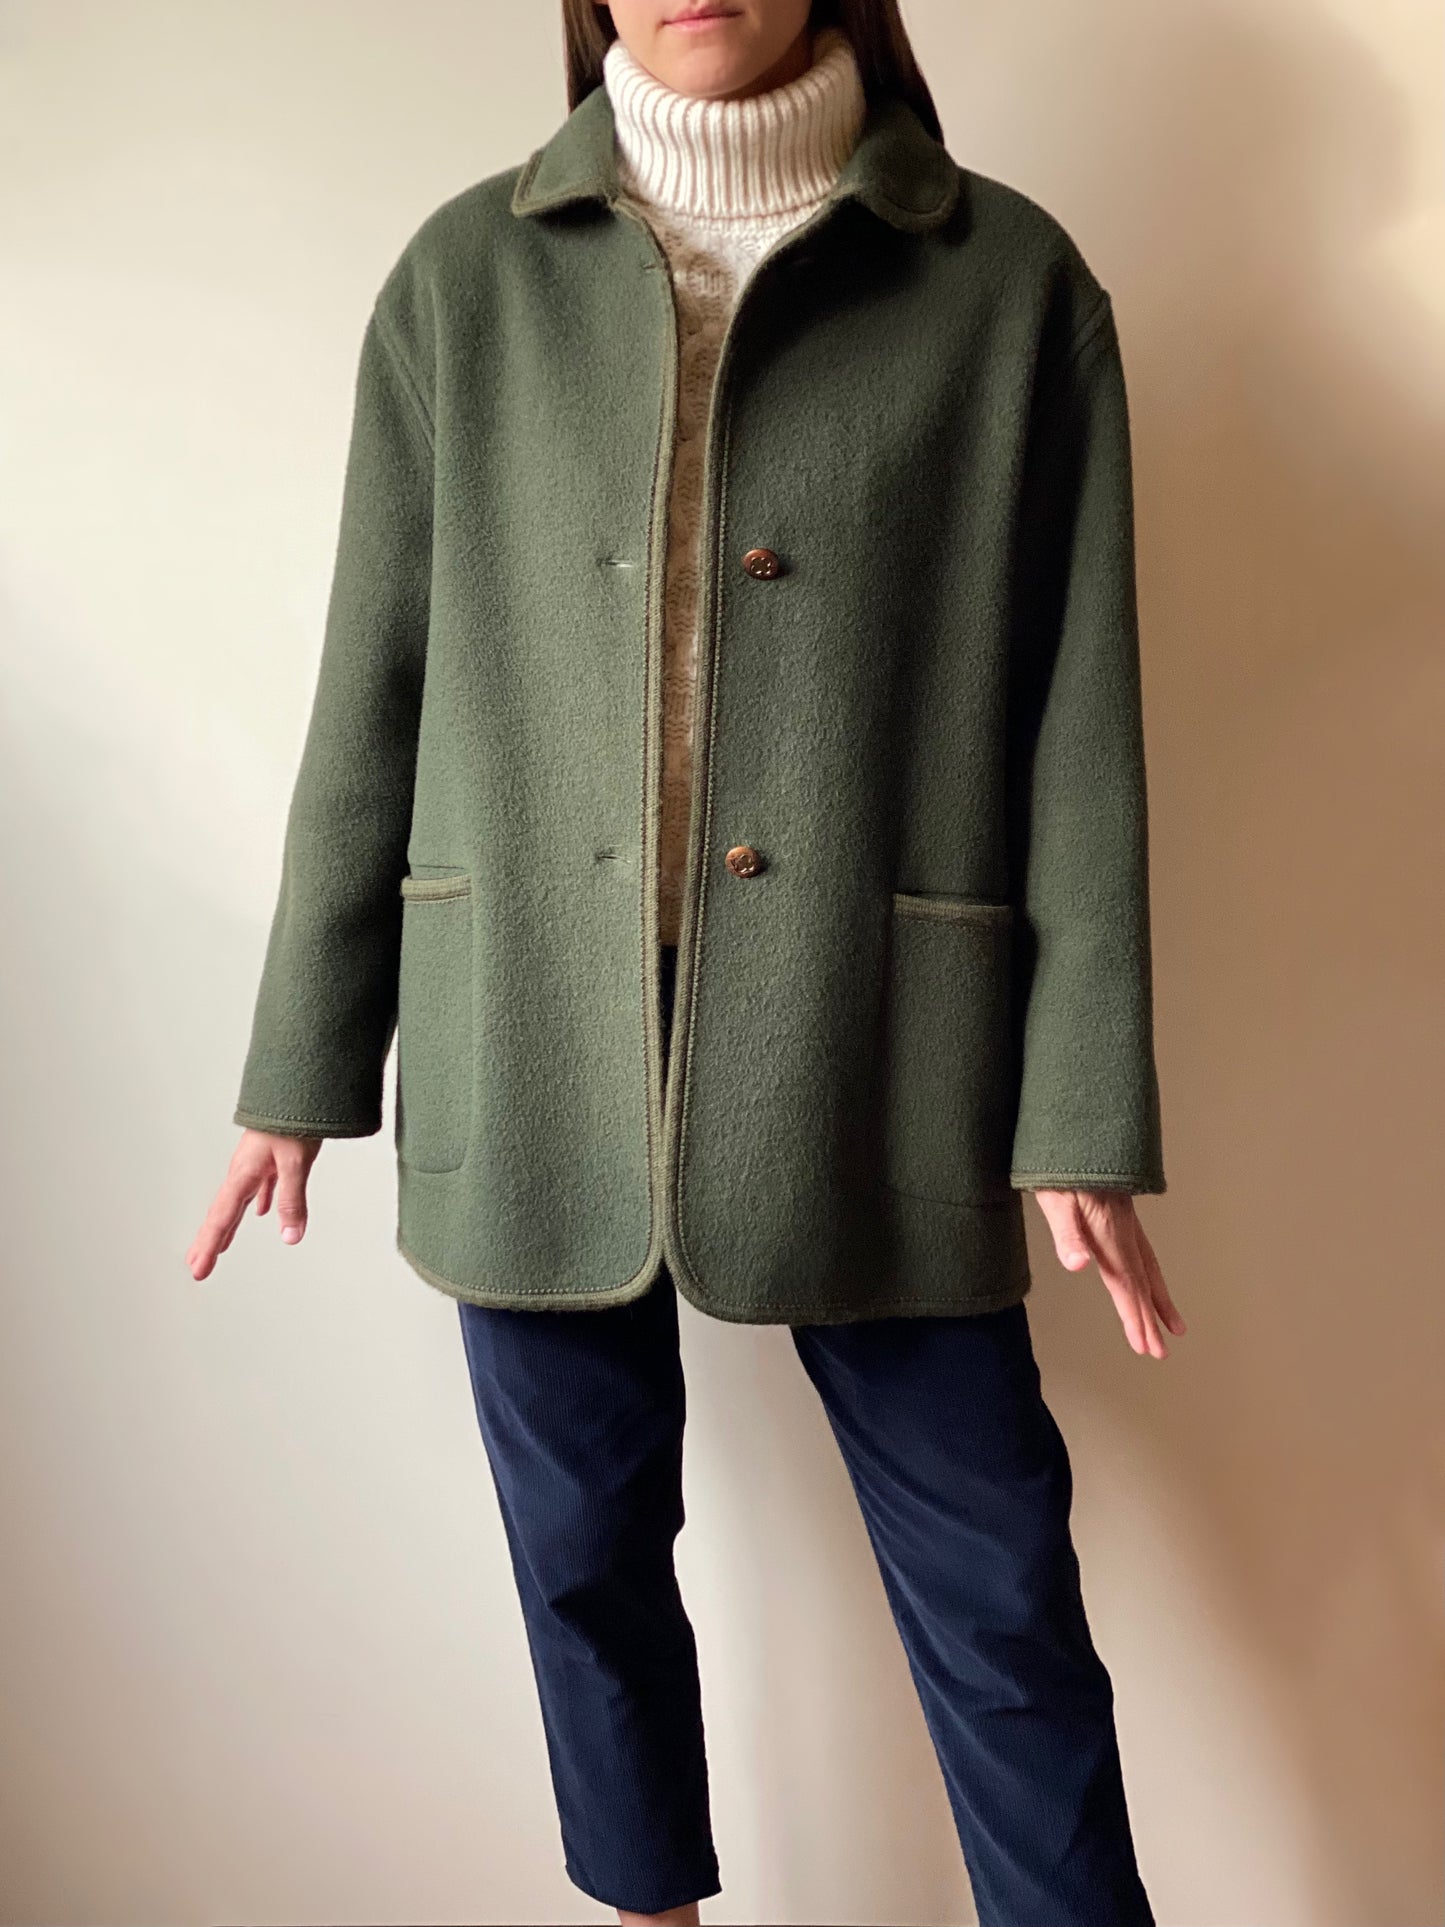 Vintage Original Tiroler Short Coat